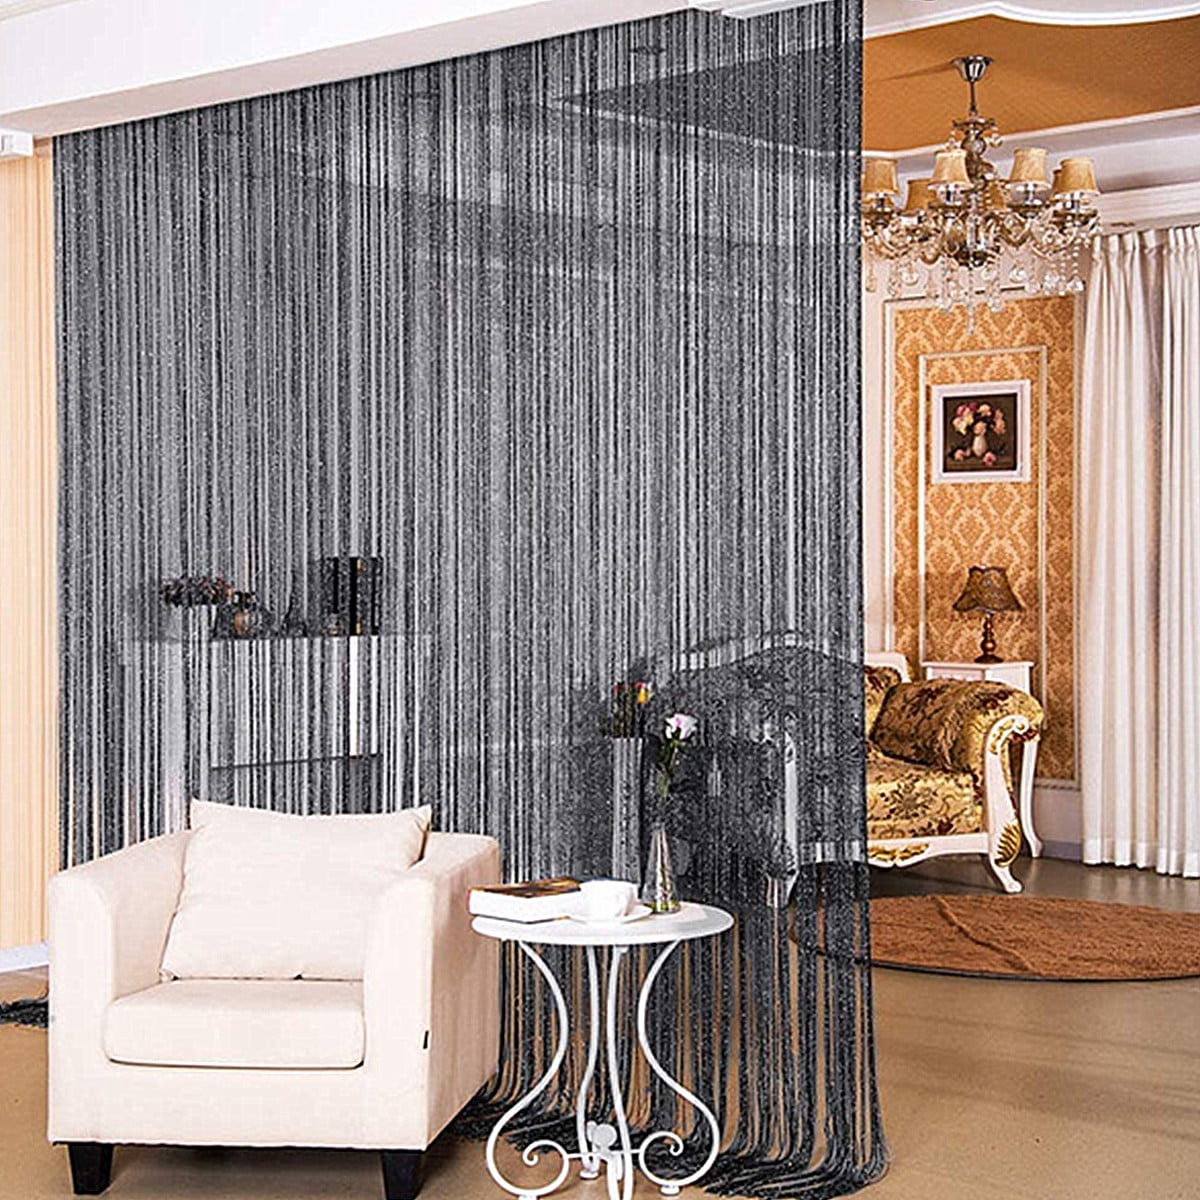 Line String Window Curtain Tassel Door Fringe Panel Room Divider Scarf Valance S 